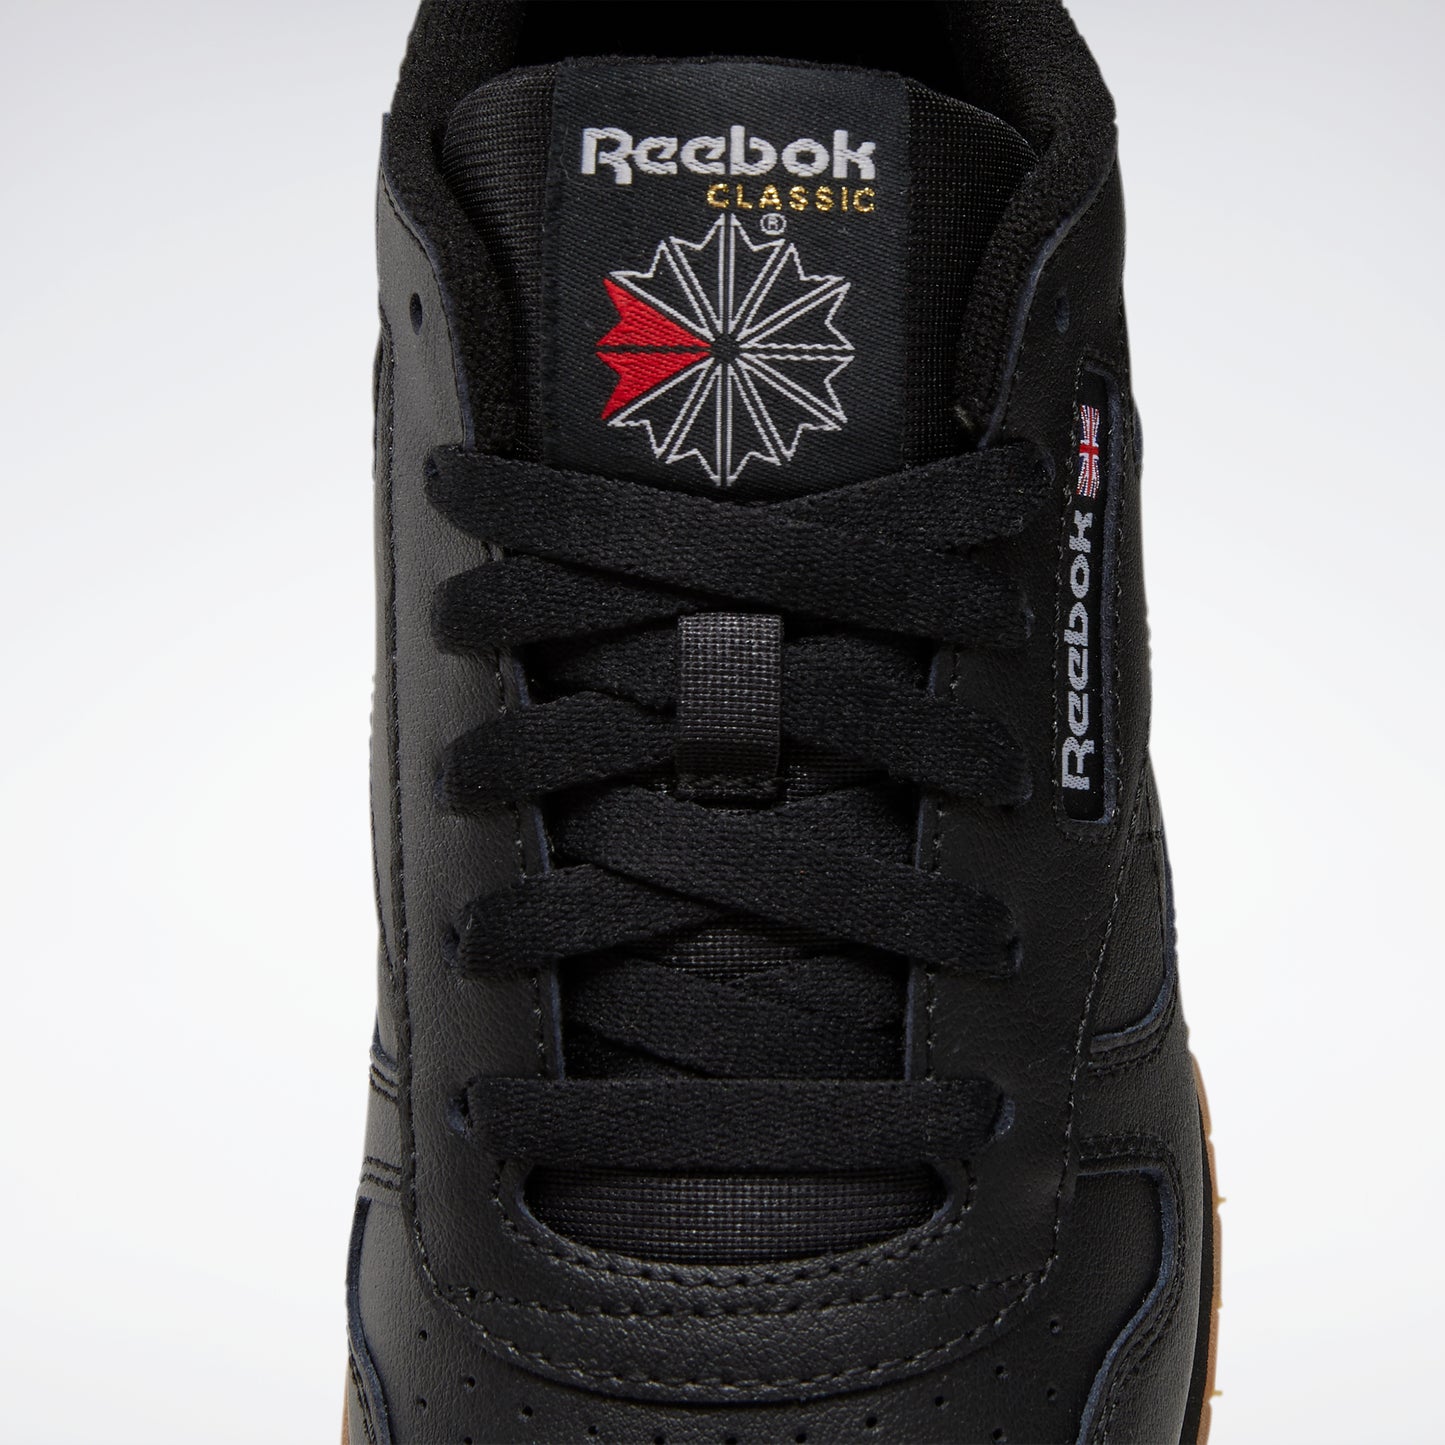 Chaussures Reebok Footwear Kids Classic Leather Shoes Junior Cblack/Cblack/Rbkg02